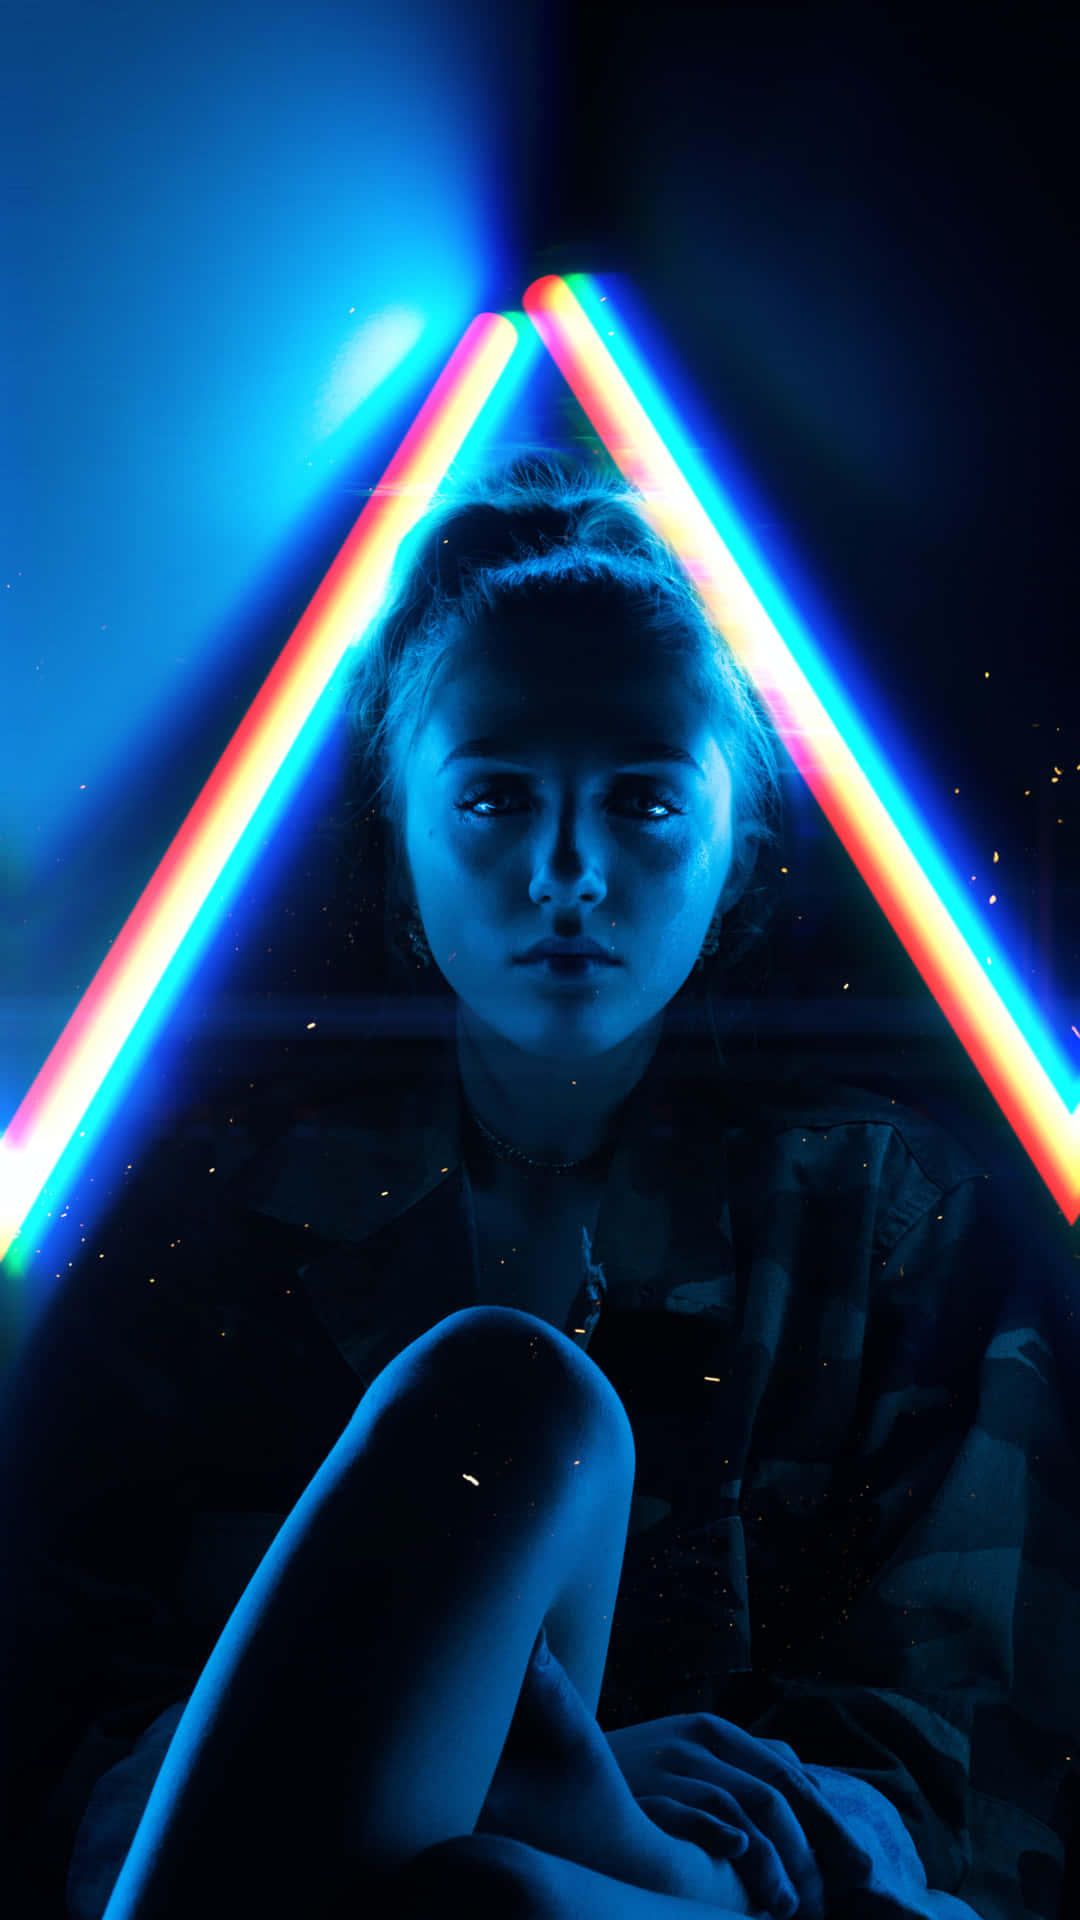 Neon Triangle Illuminated Woman Wallpaper